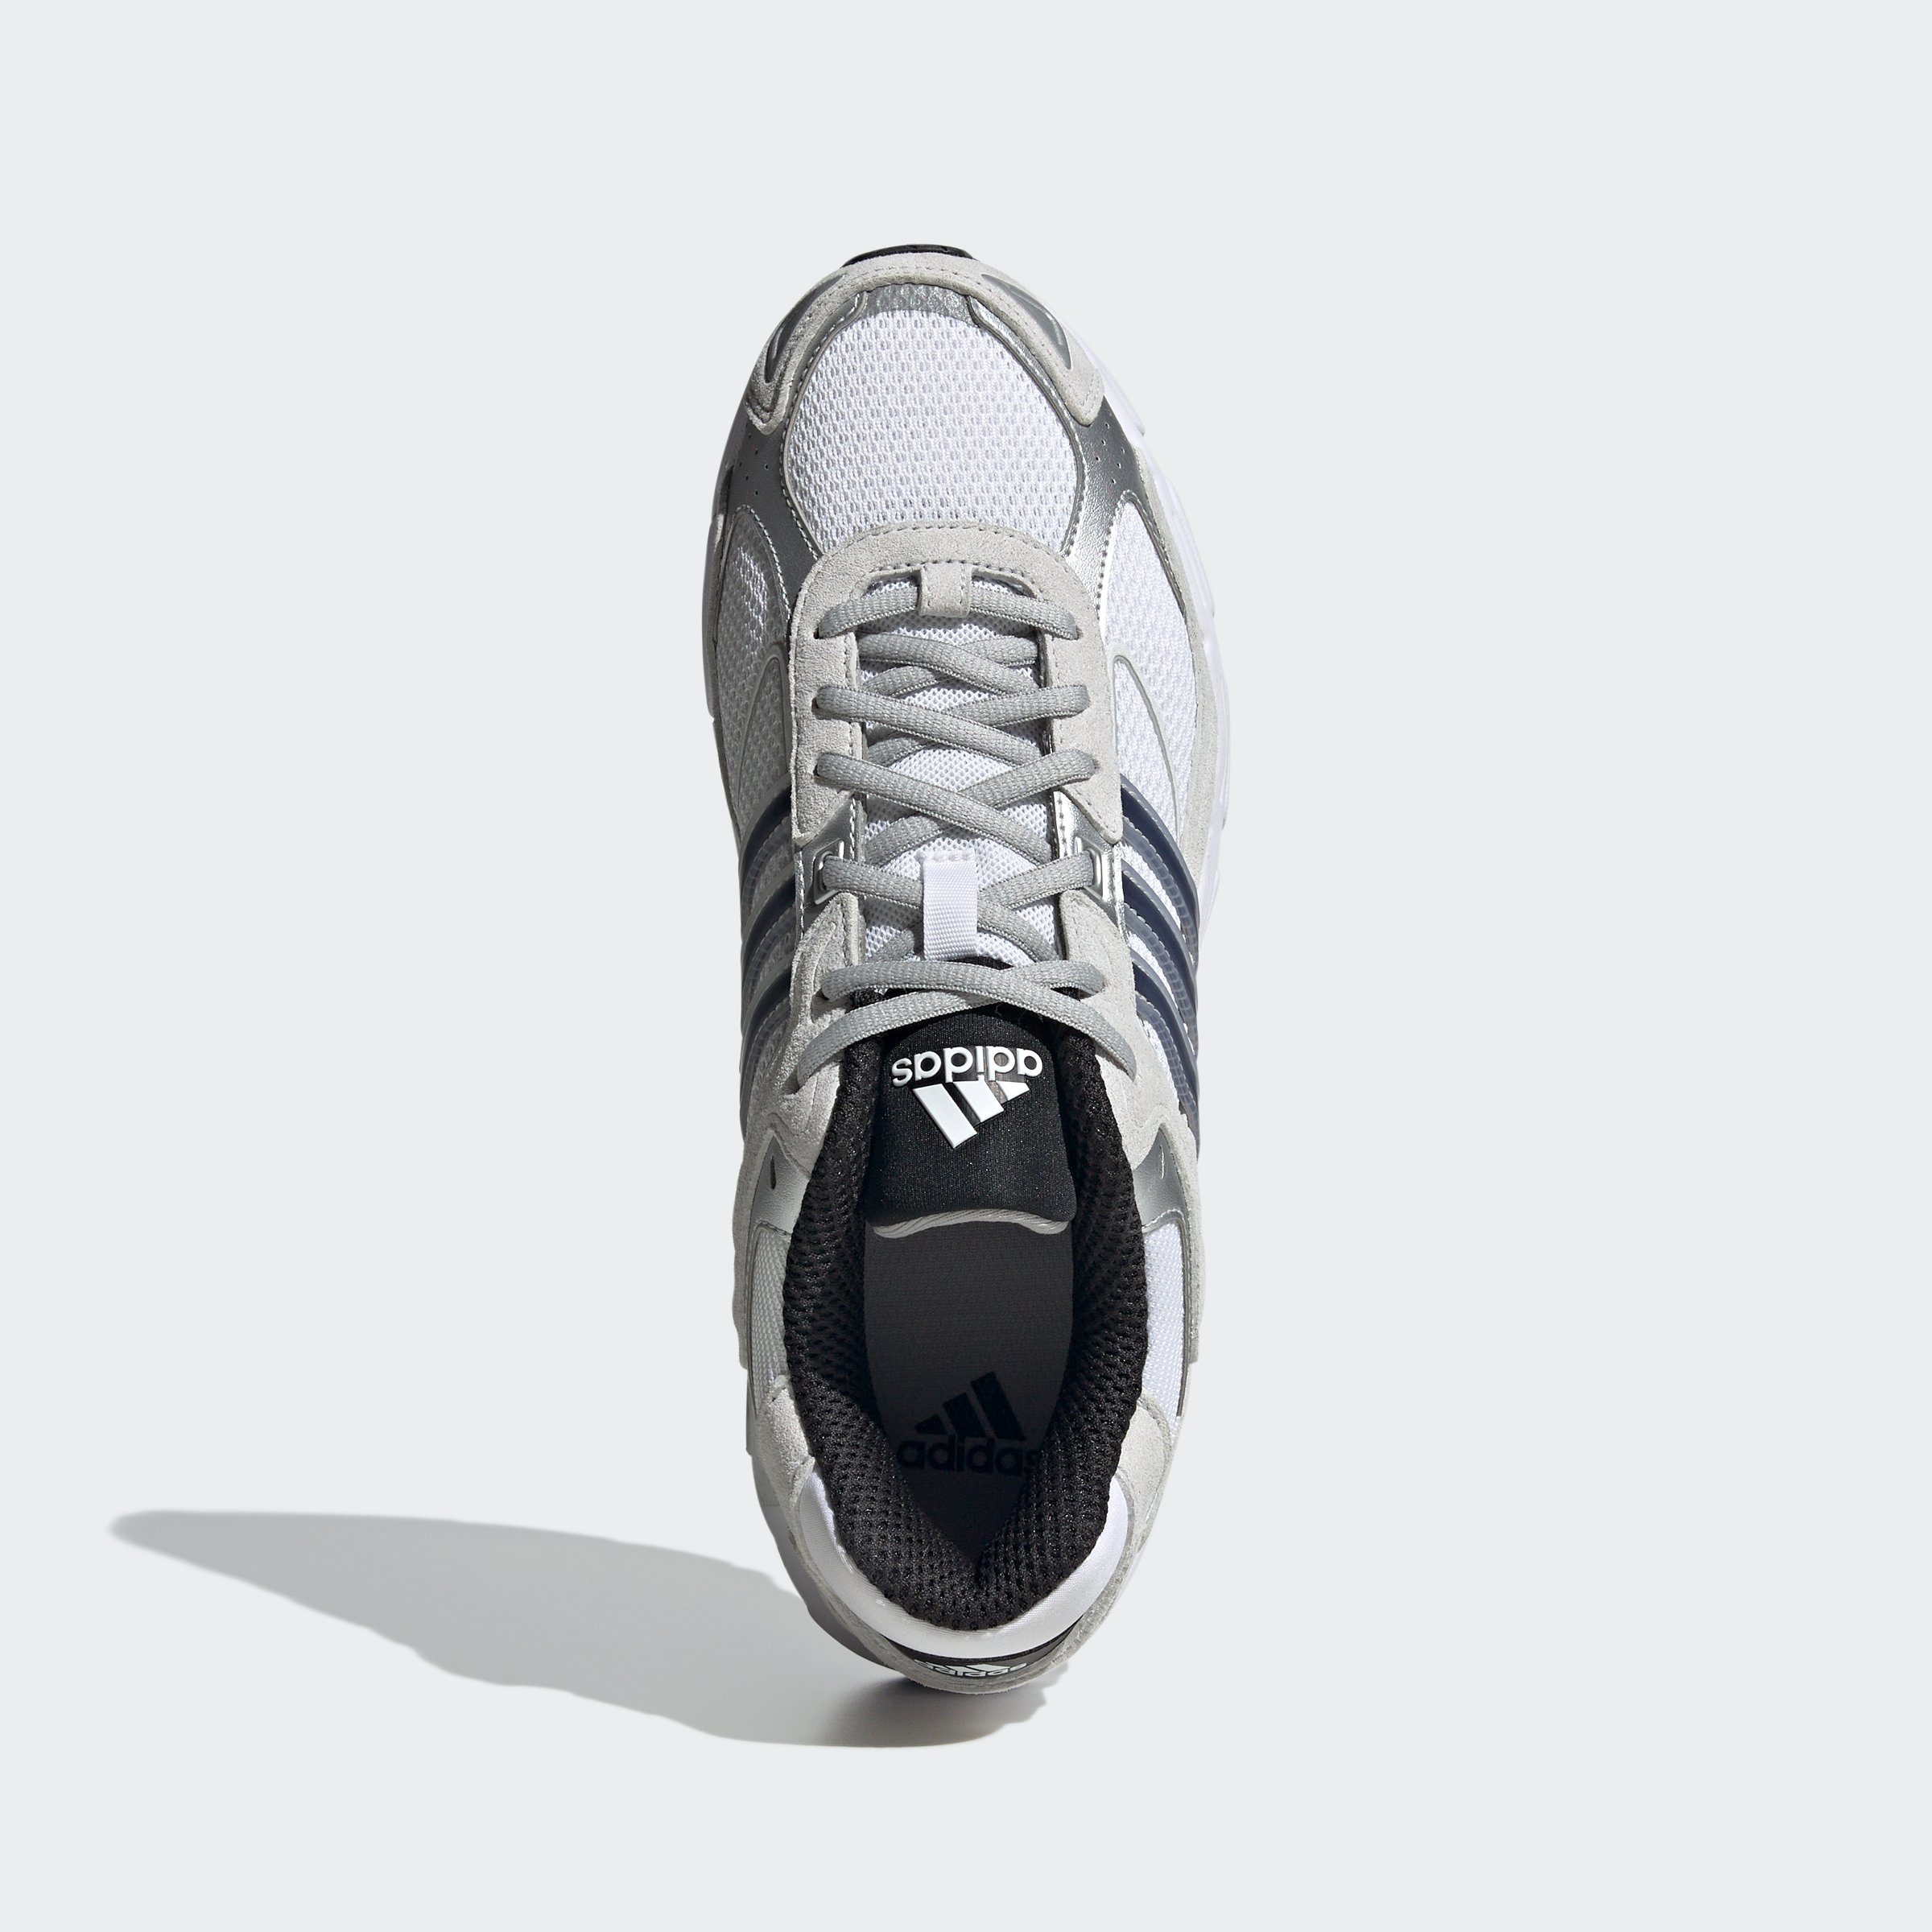 RESPONSE CL Black / Grey Two Sneaker Core Originals adidas White / Cloud